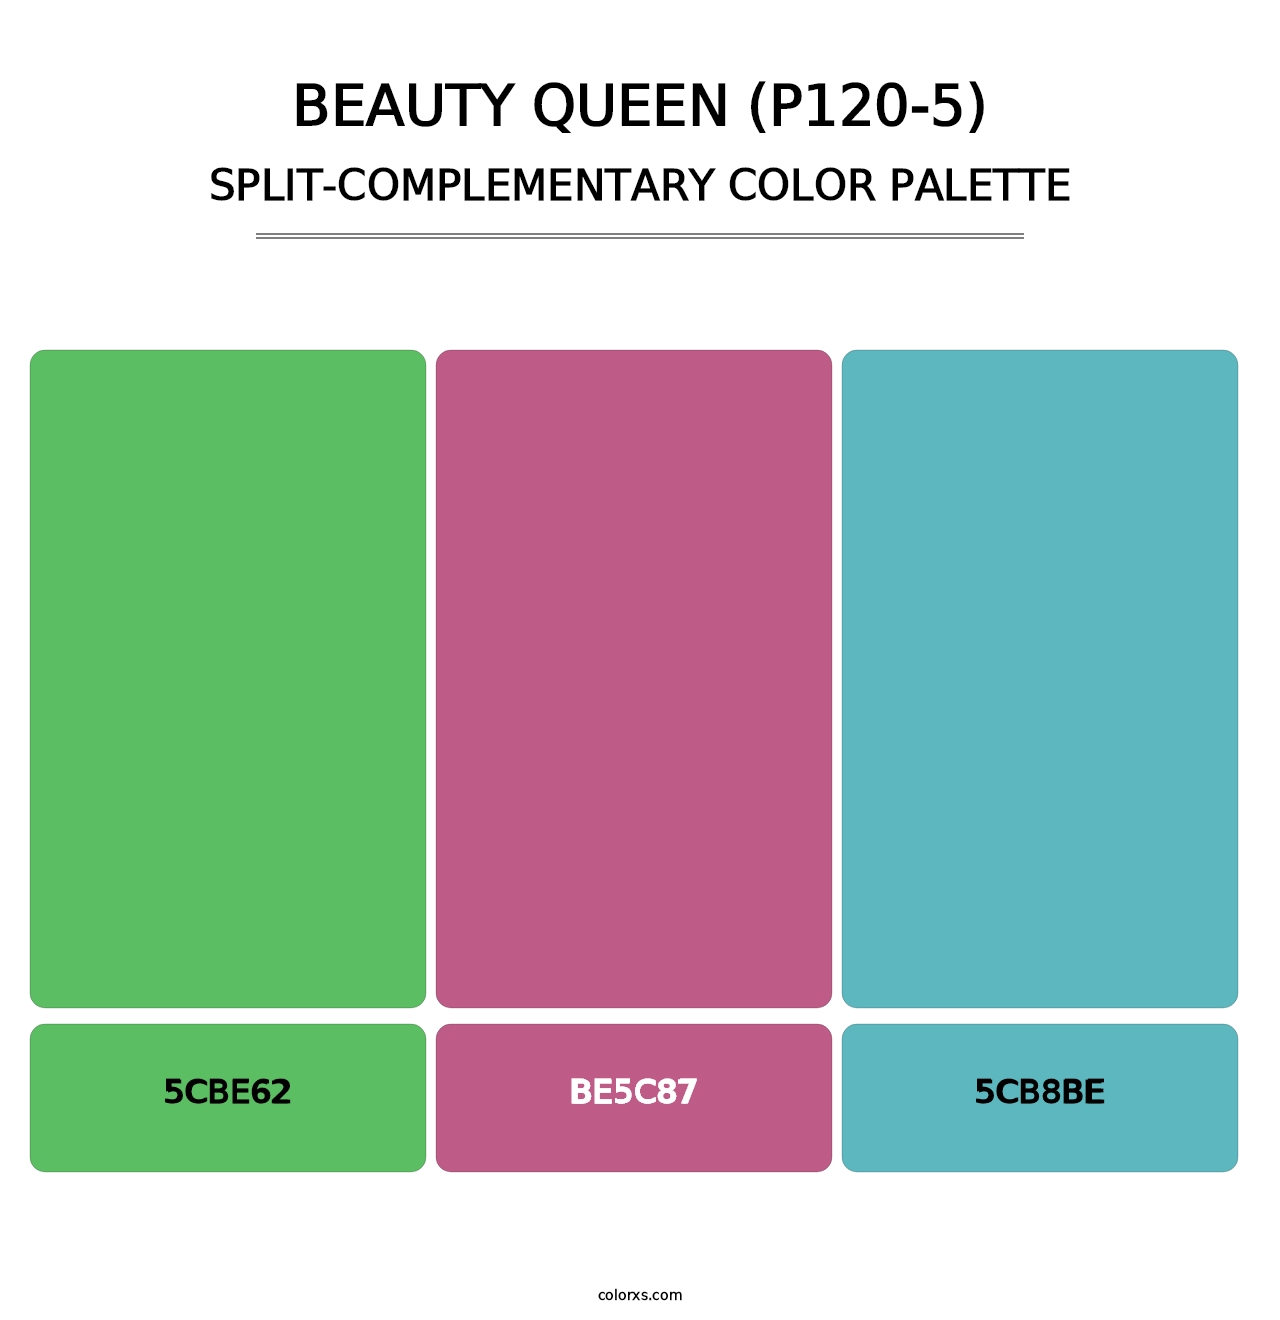 Beauty Queen (P120-5) - Split-Complementary Color Palette